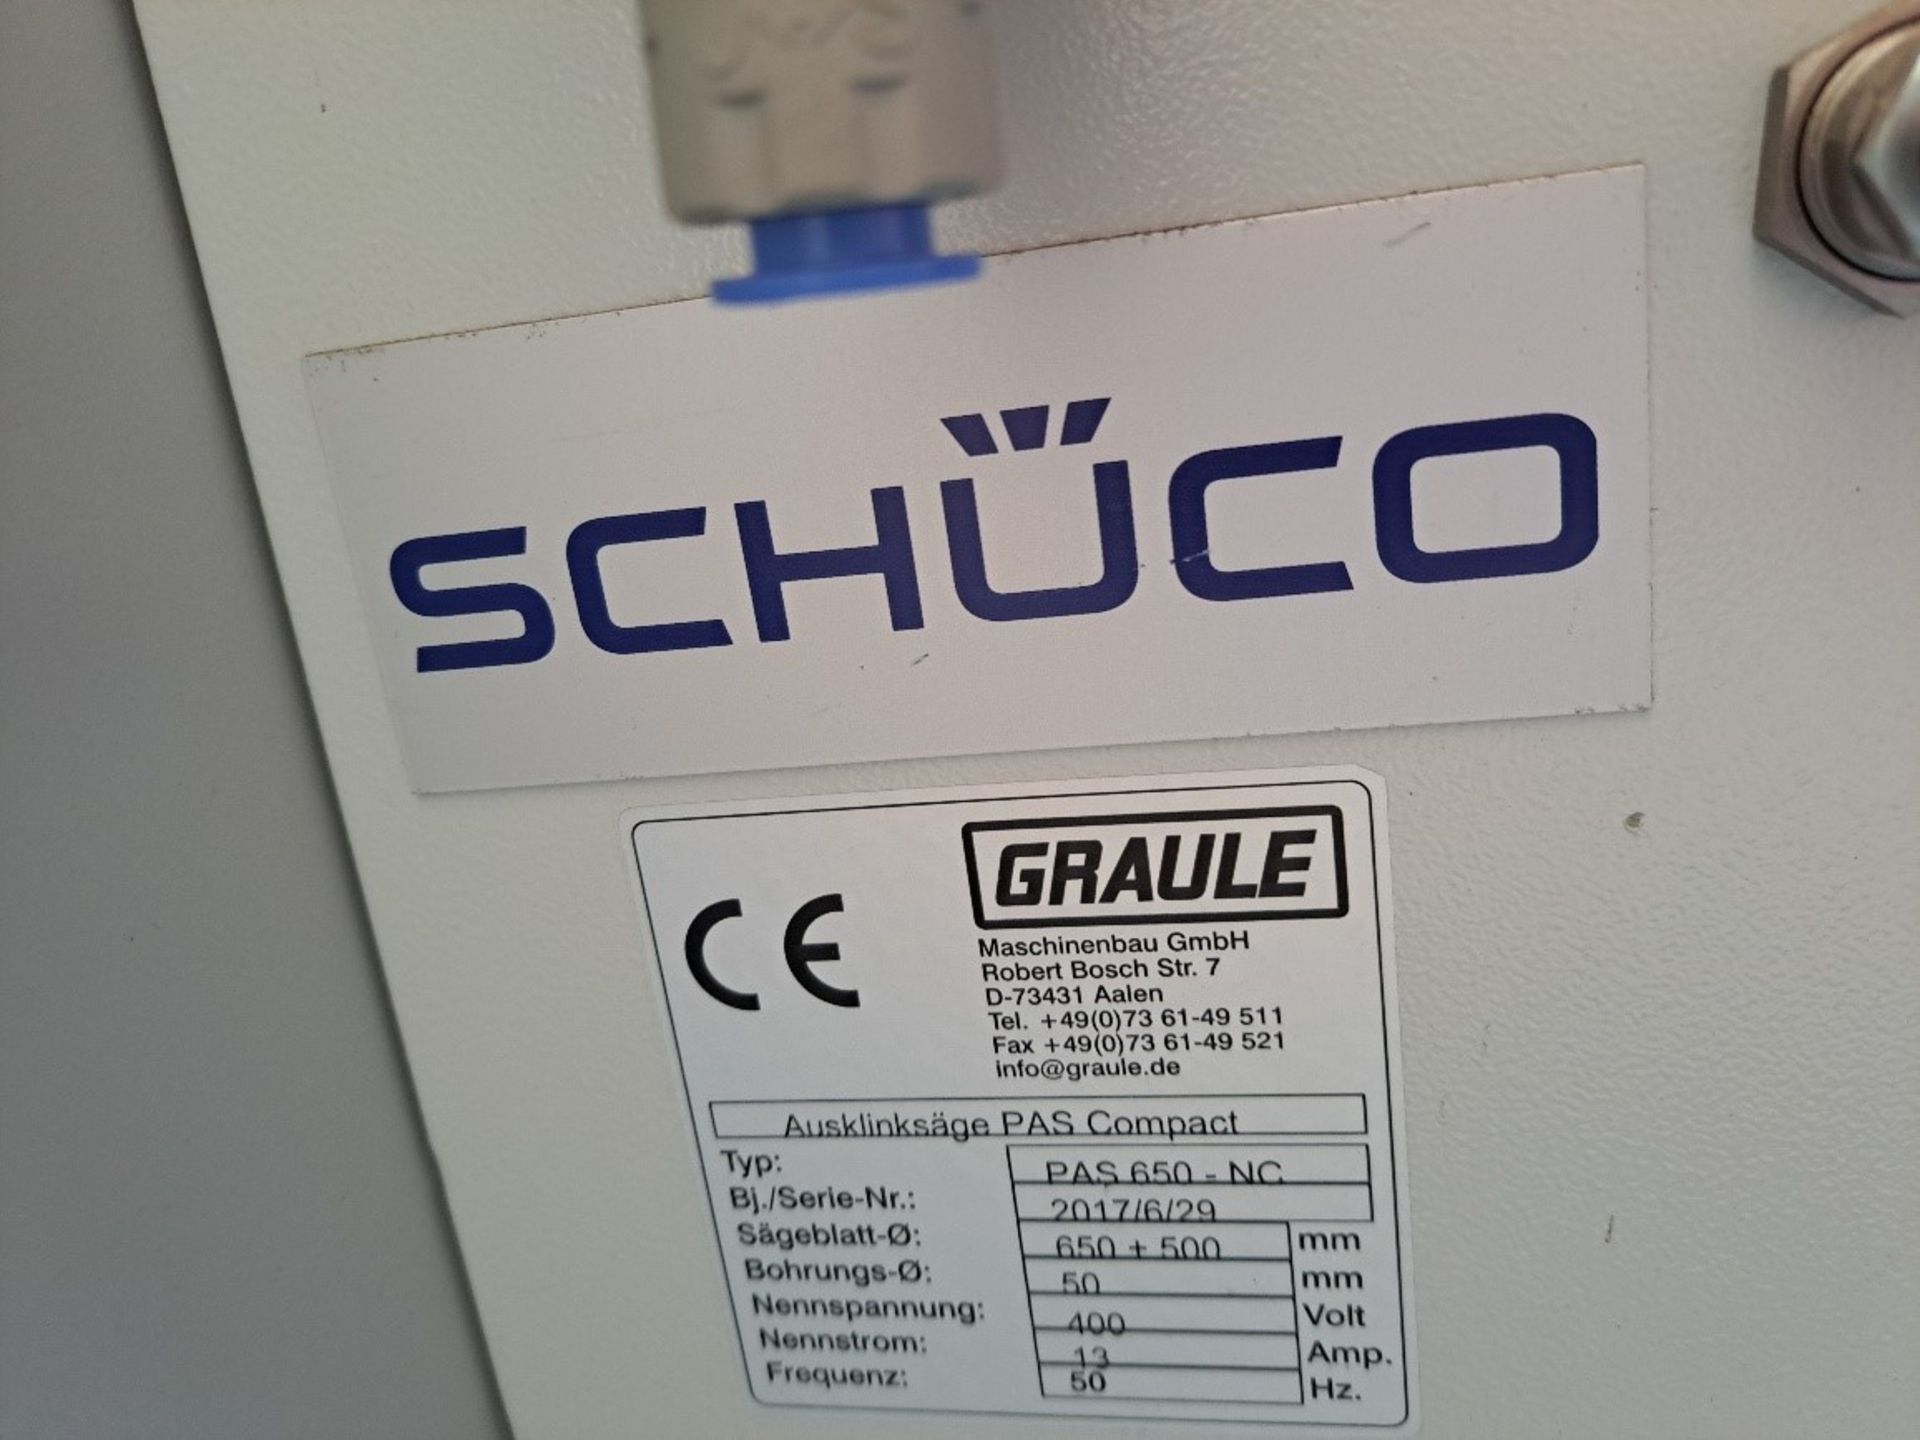 2017, Schuco PAS Compact 650 - Image 3 of 3